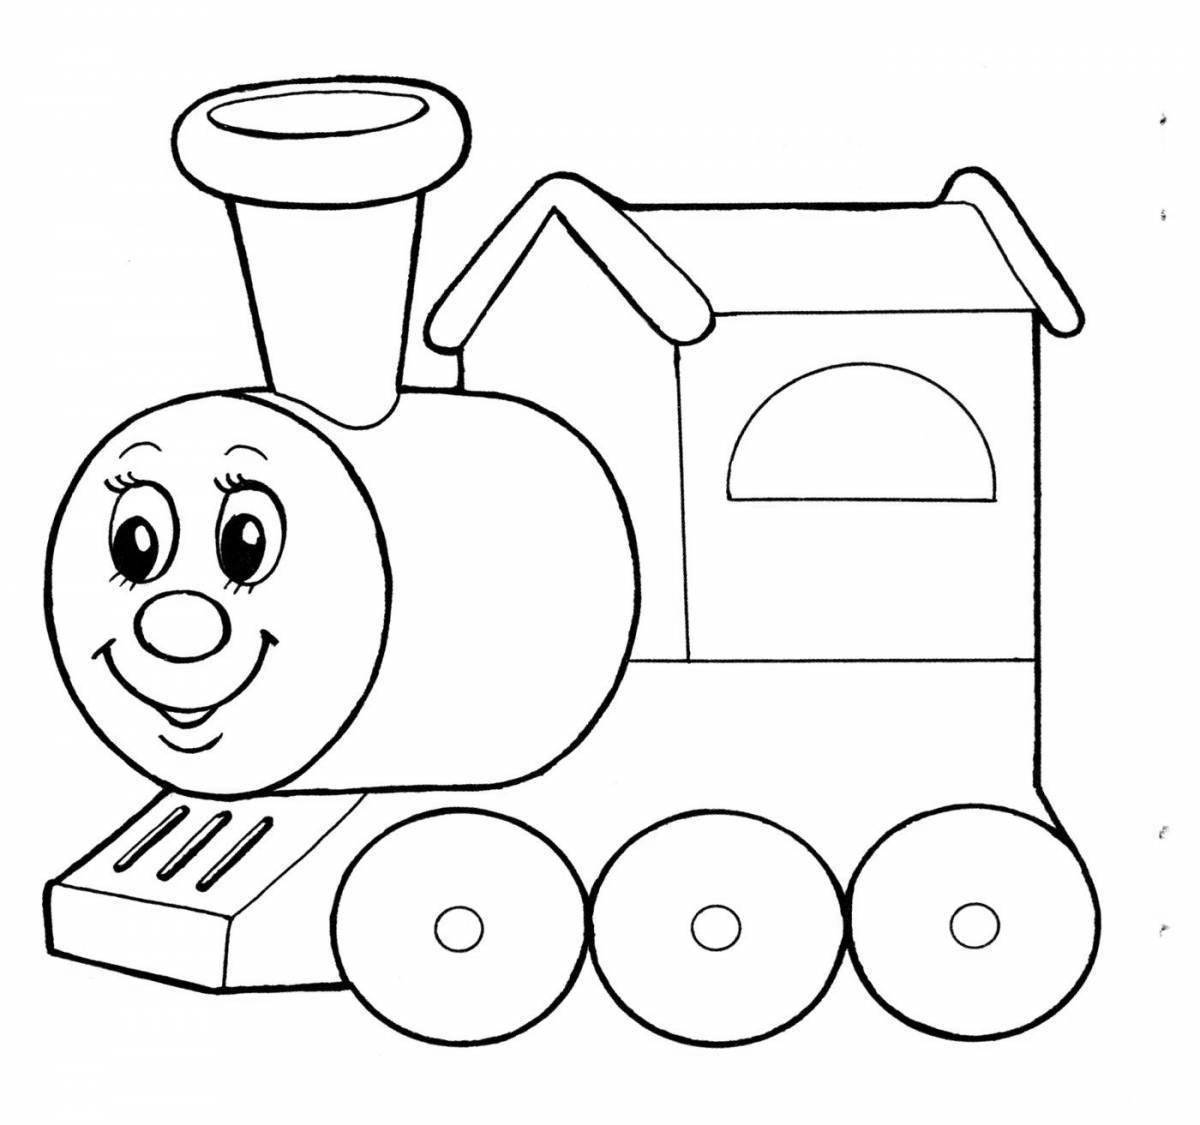 Wonderful train coloring book for kids